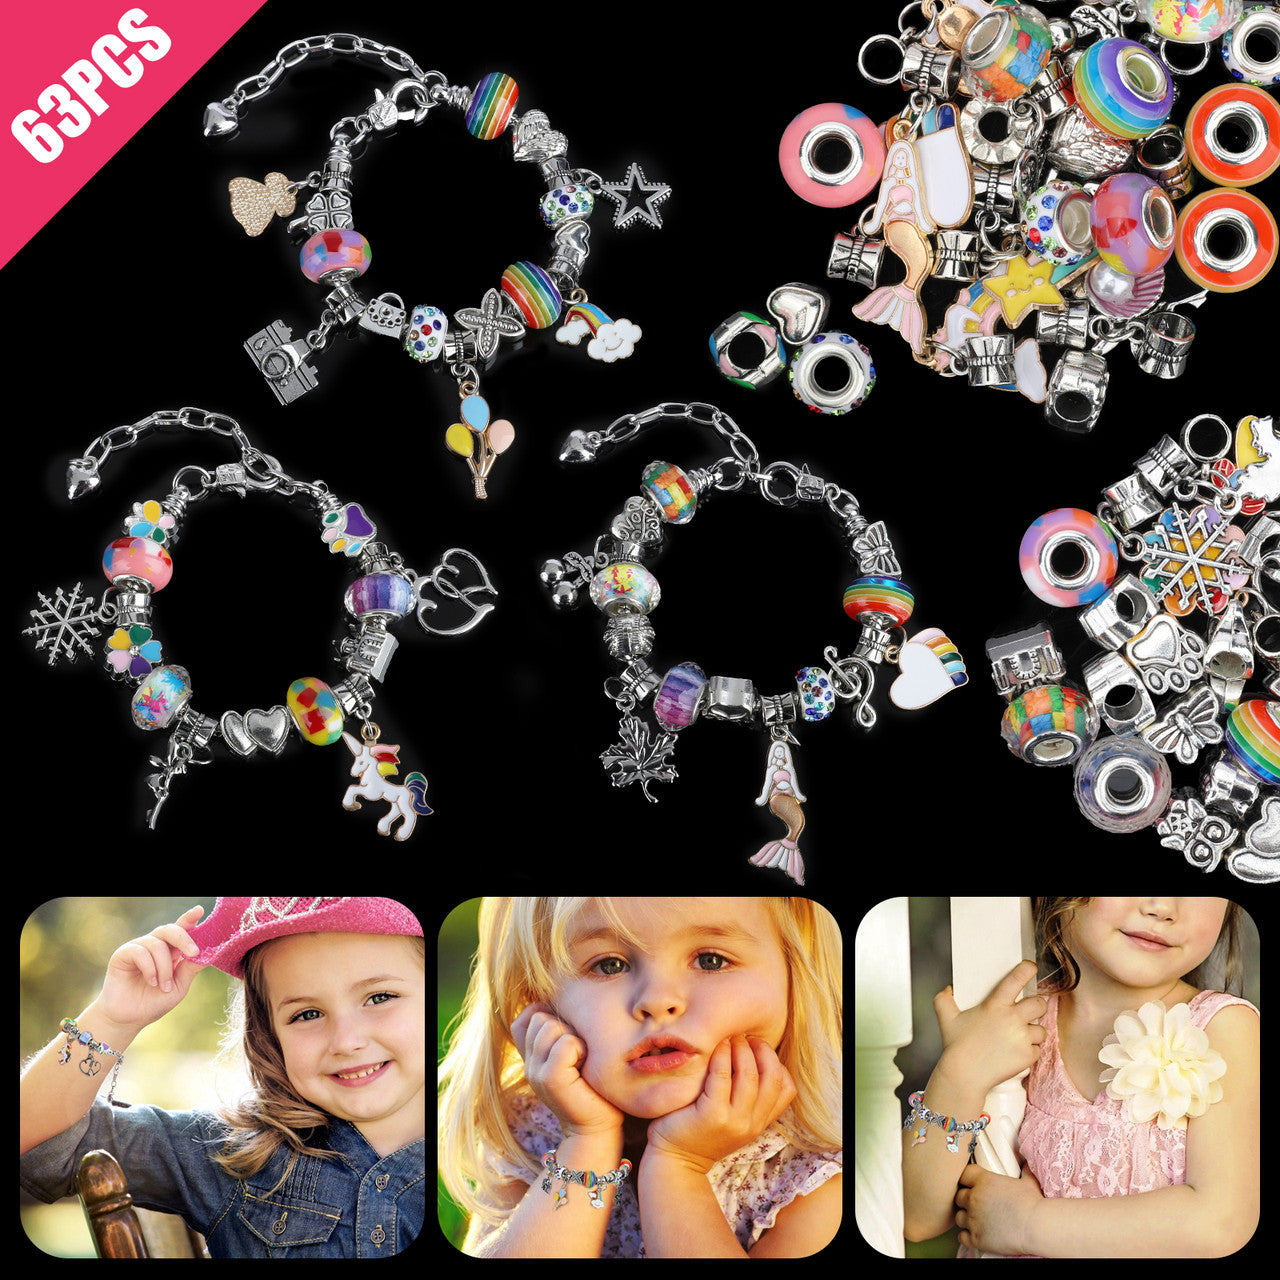 63 Piece DIY Bracelet Making Color Kit - DIY Charm Bracelets Beads for Girls, Adults and Beginner Jewelry Making Kit